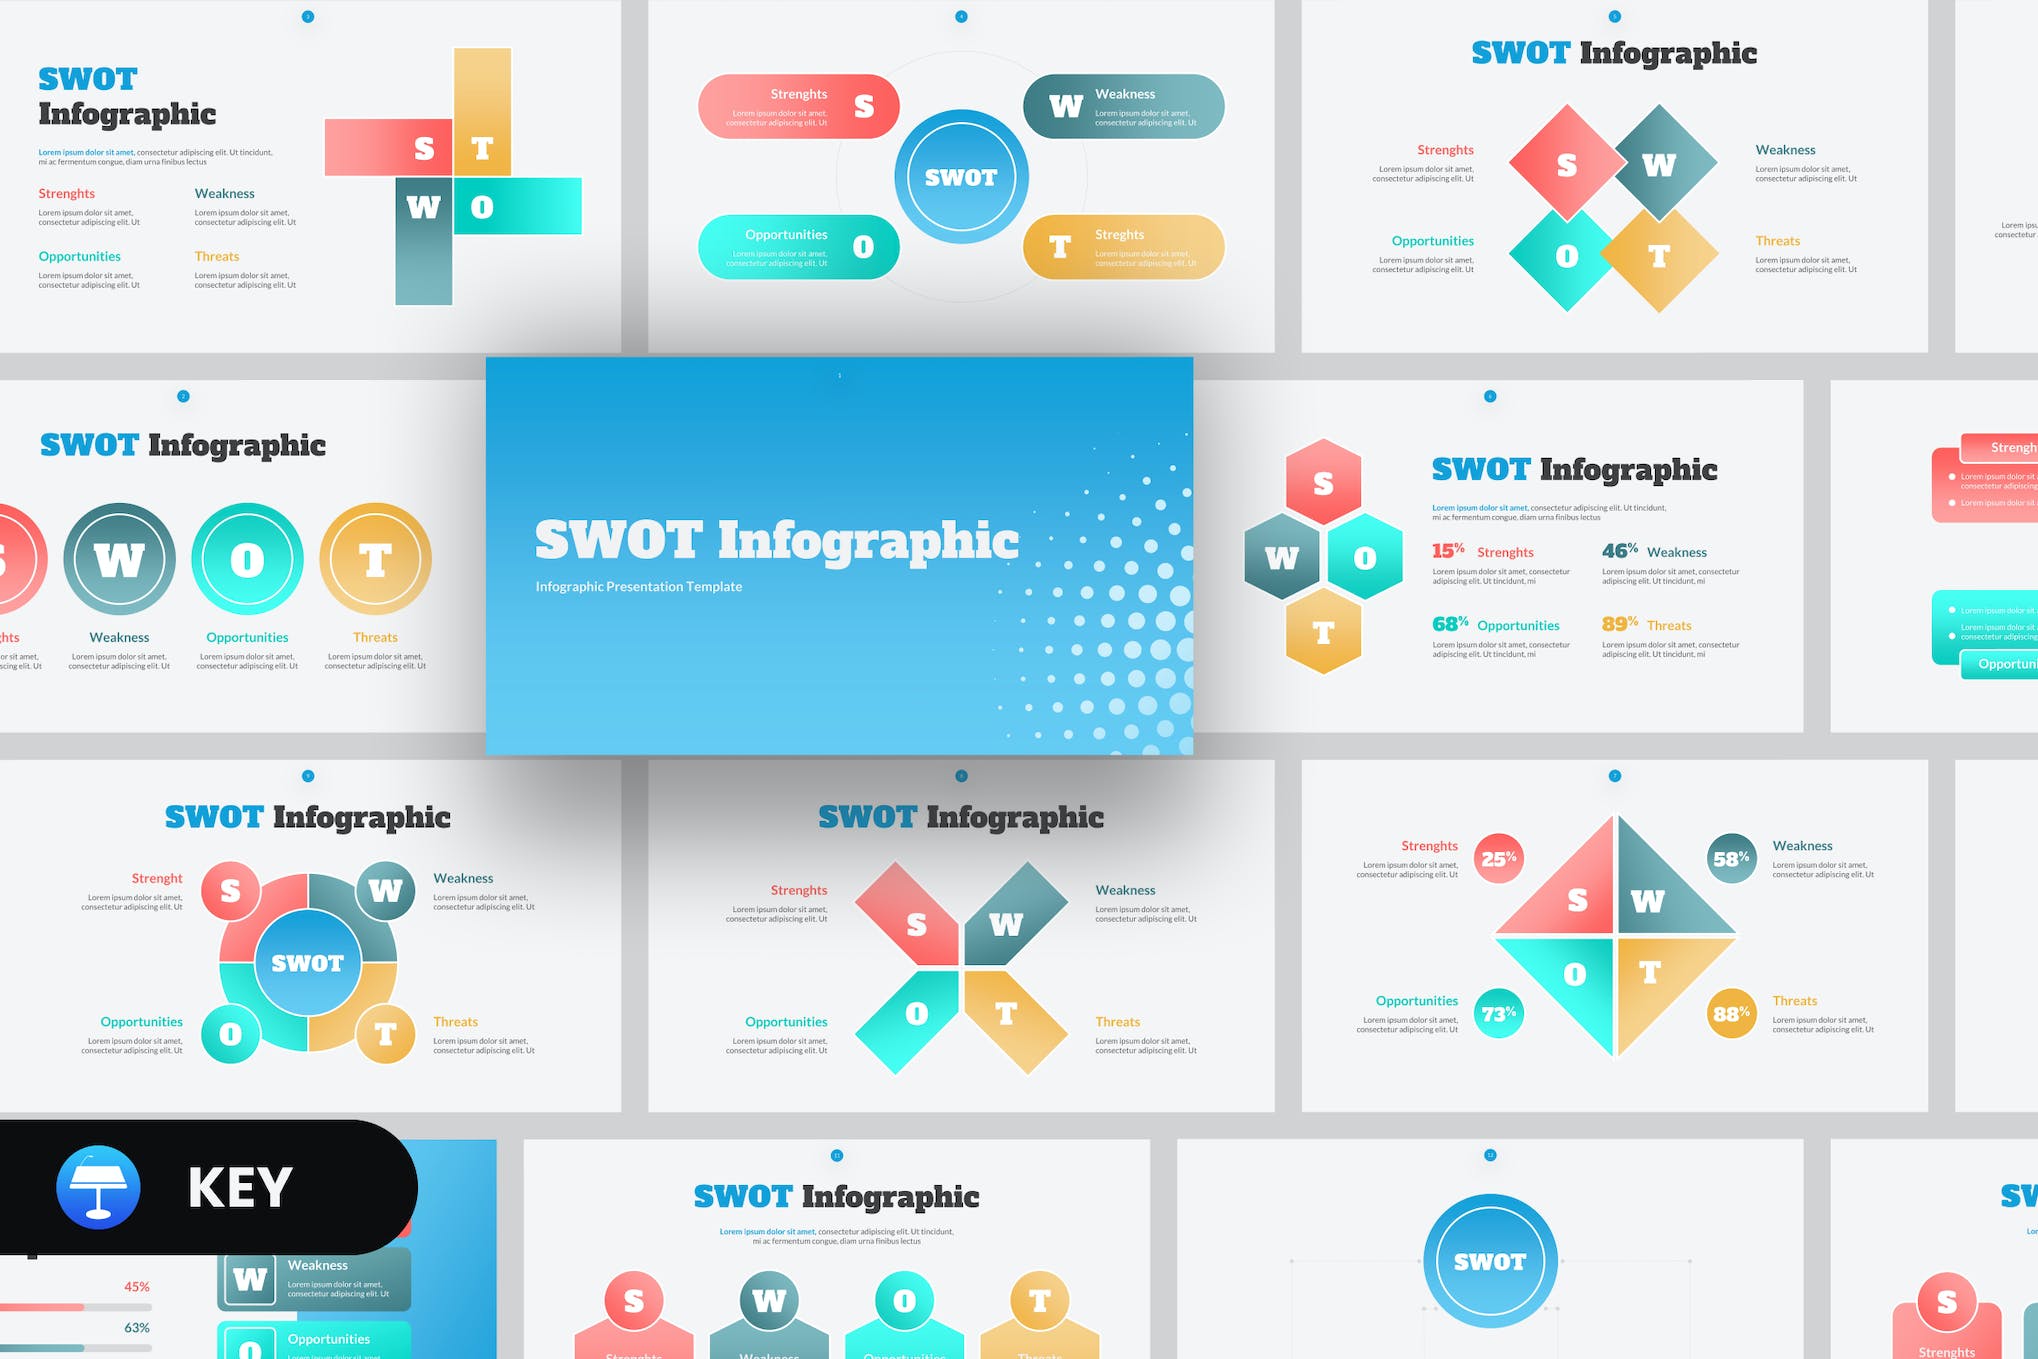 SWOT Infographic Keynote Presentation